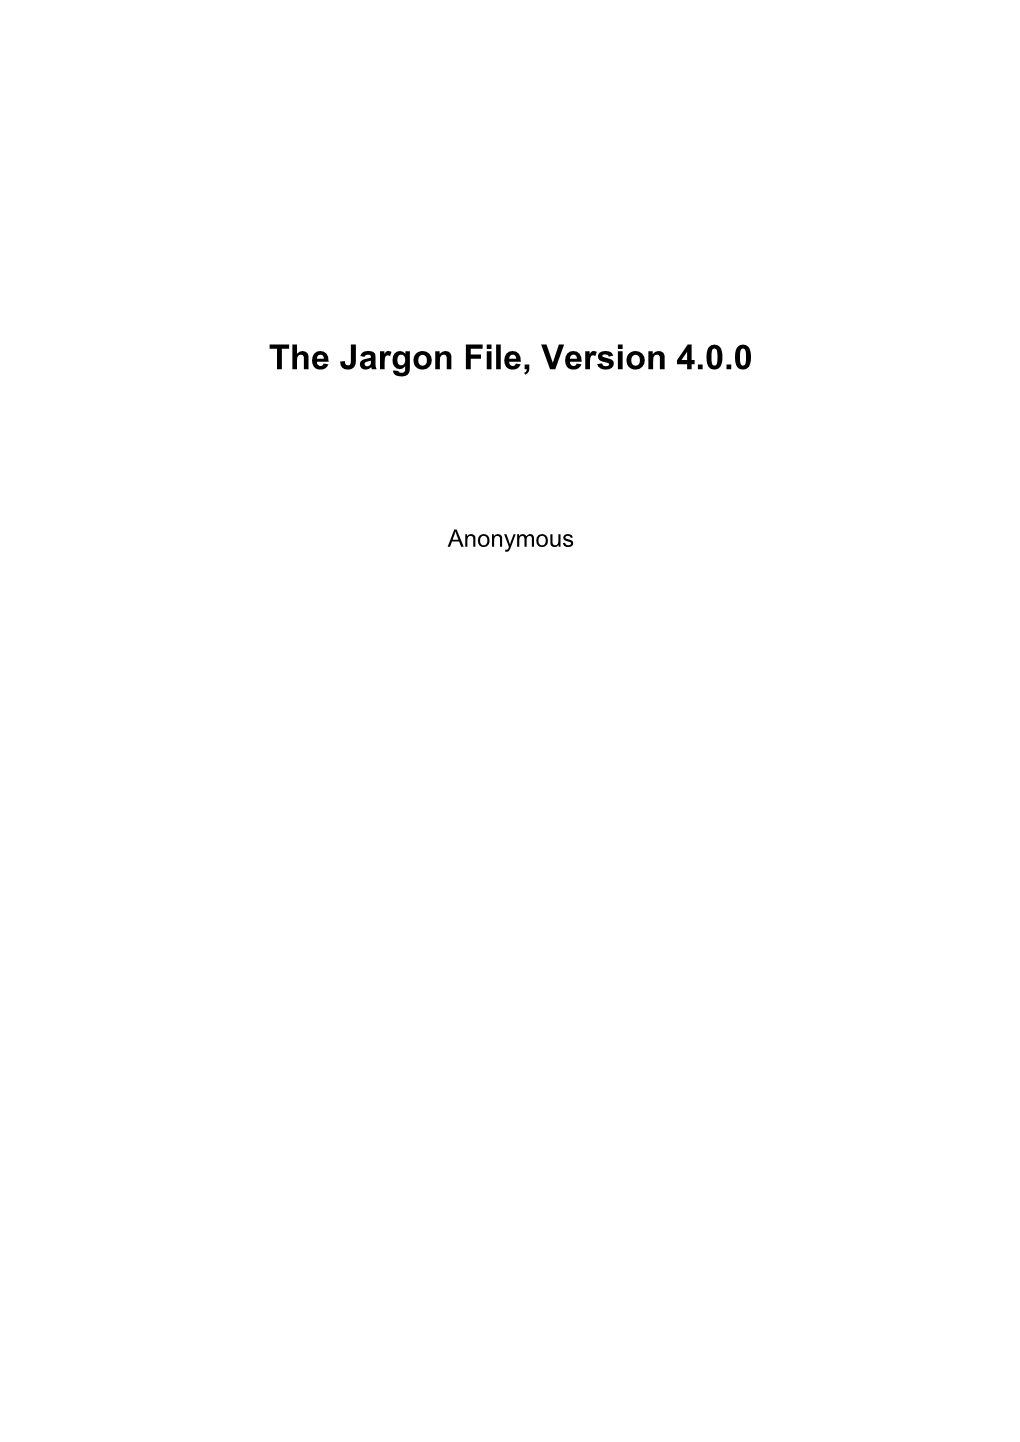 The Jargon File, Version 4.0.0